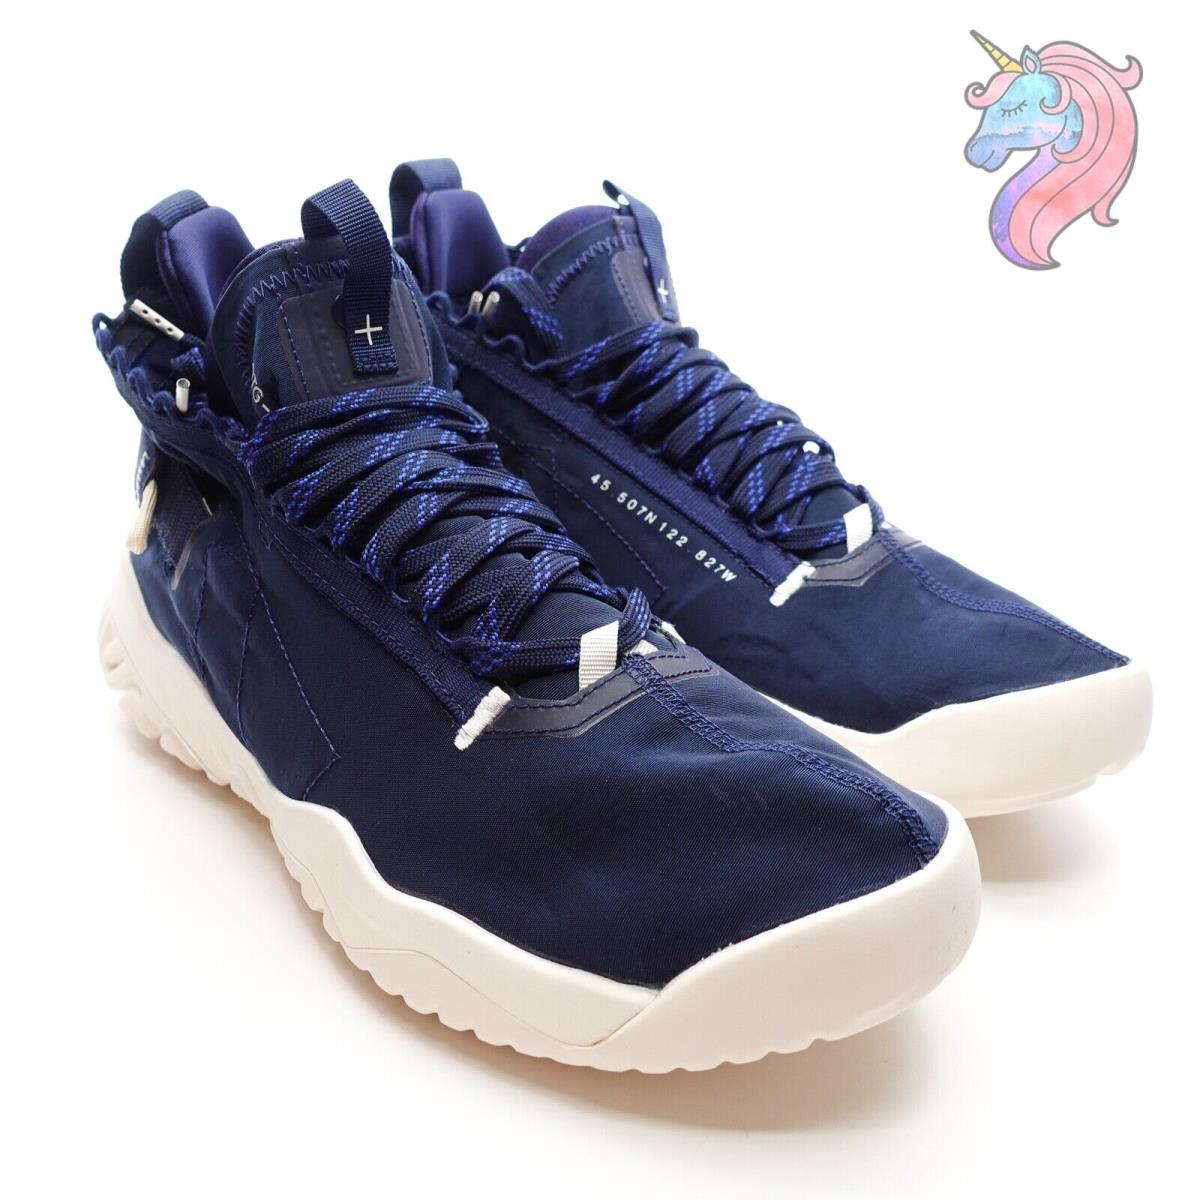 Nike shoes Proto - Navy Blue 5